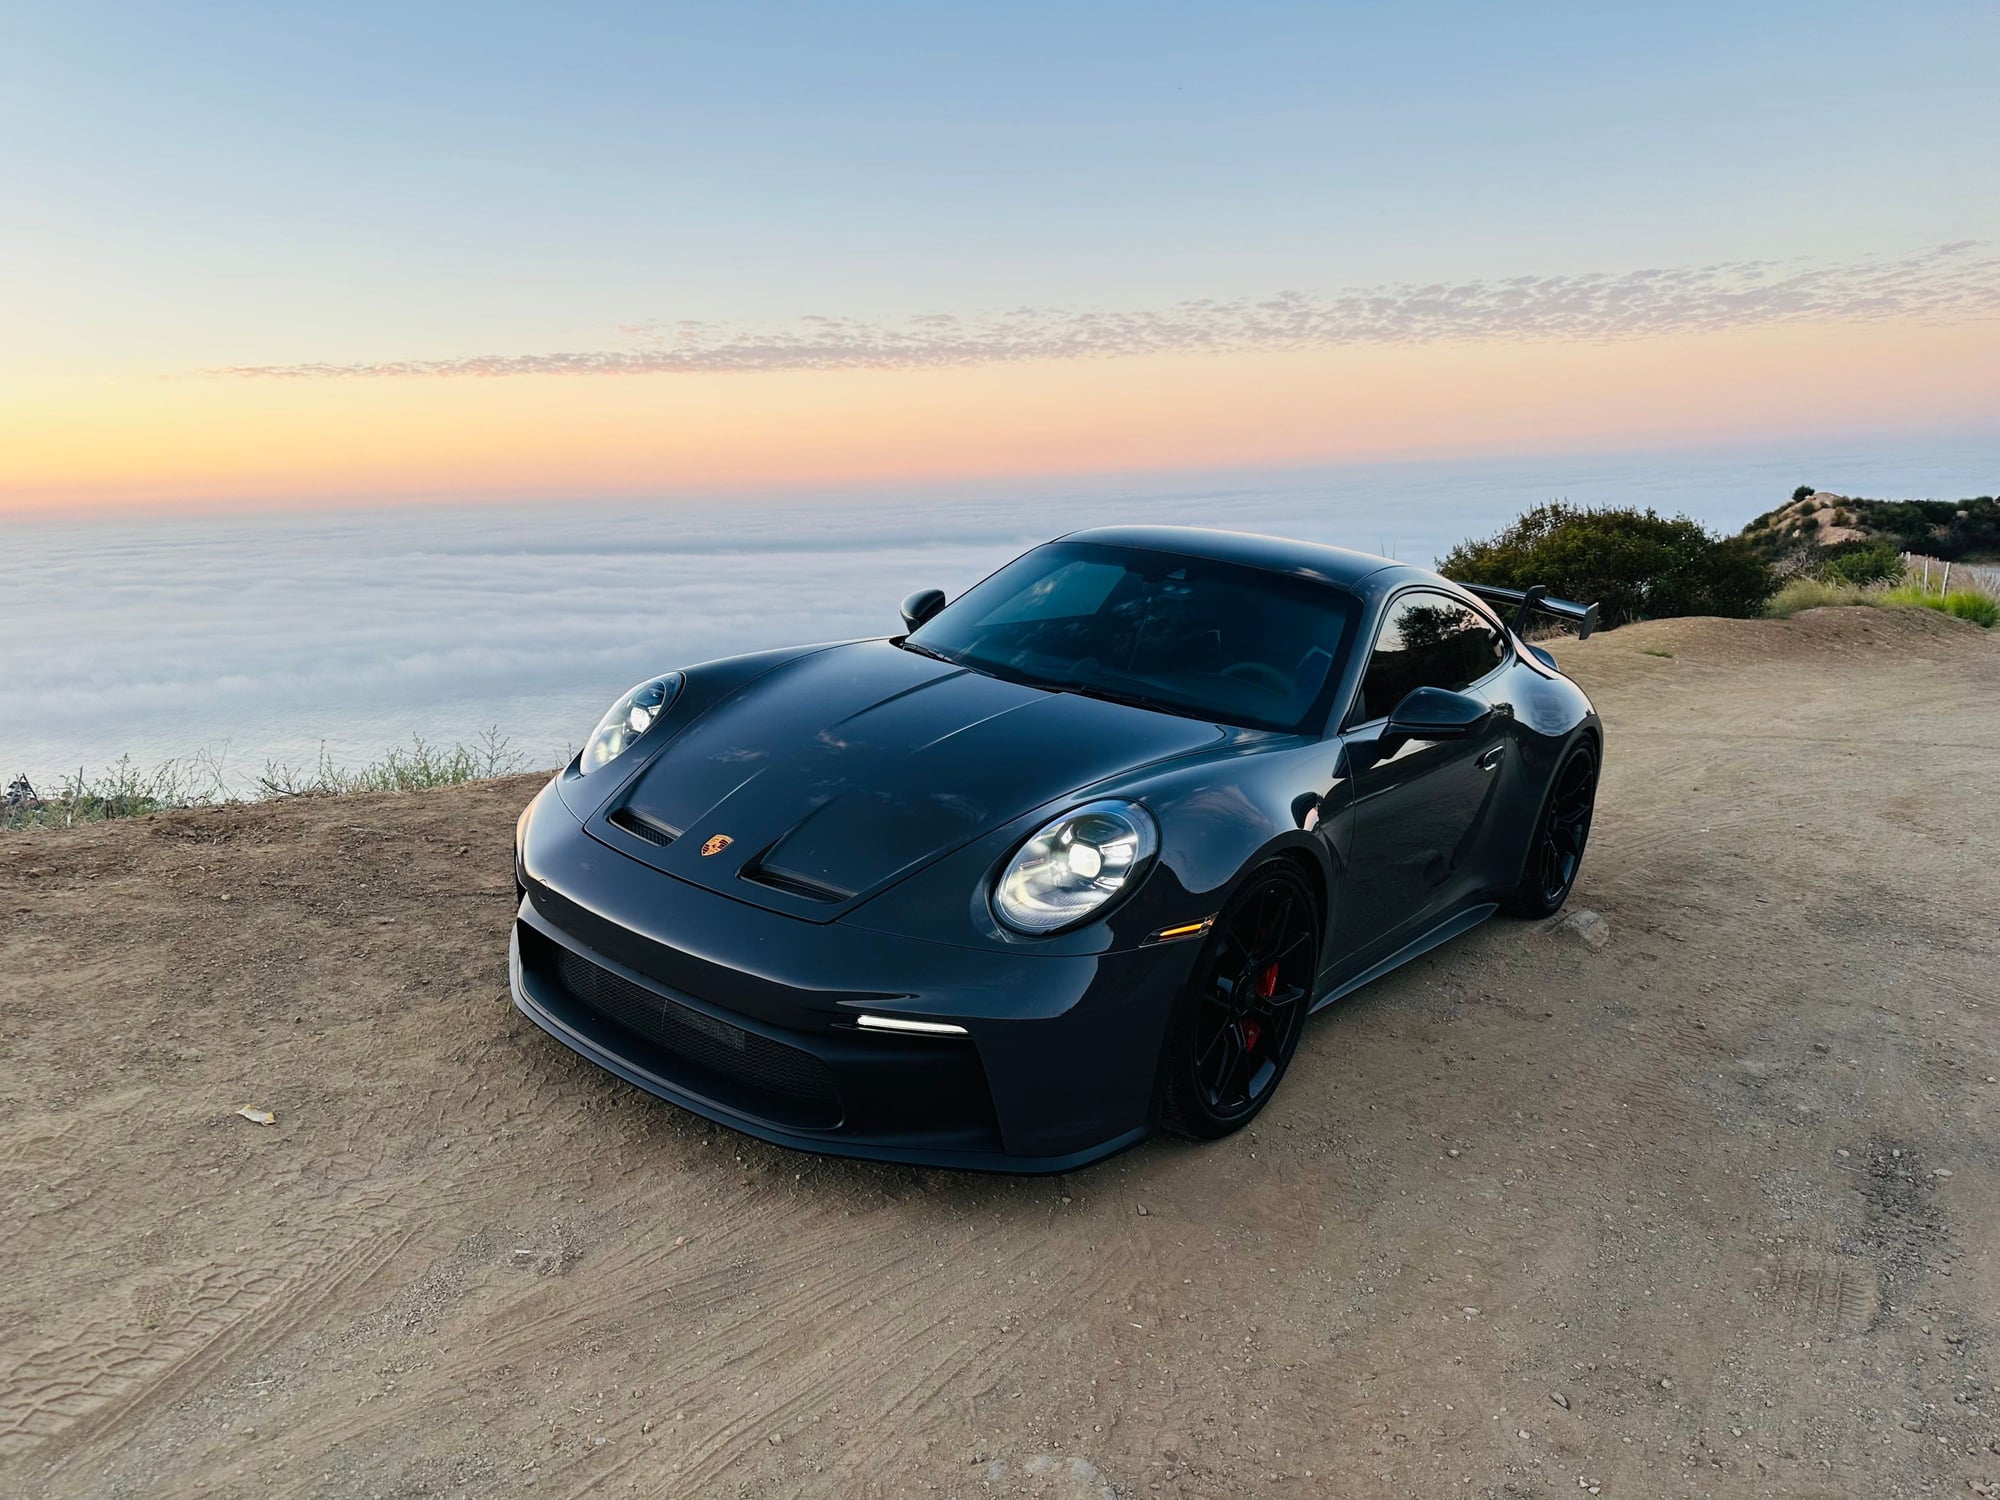 2022 Porsche 911 - 992 GT3, PTS, CPO Til 2029, Buckets, PDK - Used - VIN Xxxxxxxxxxxxxxxx - 9,954 Miles - Automatic - Coupe - Los Angeles, CA 91436, United States